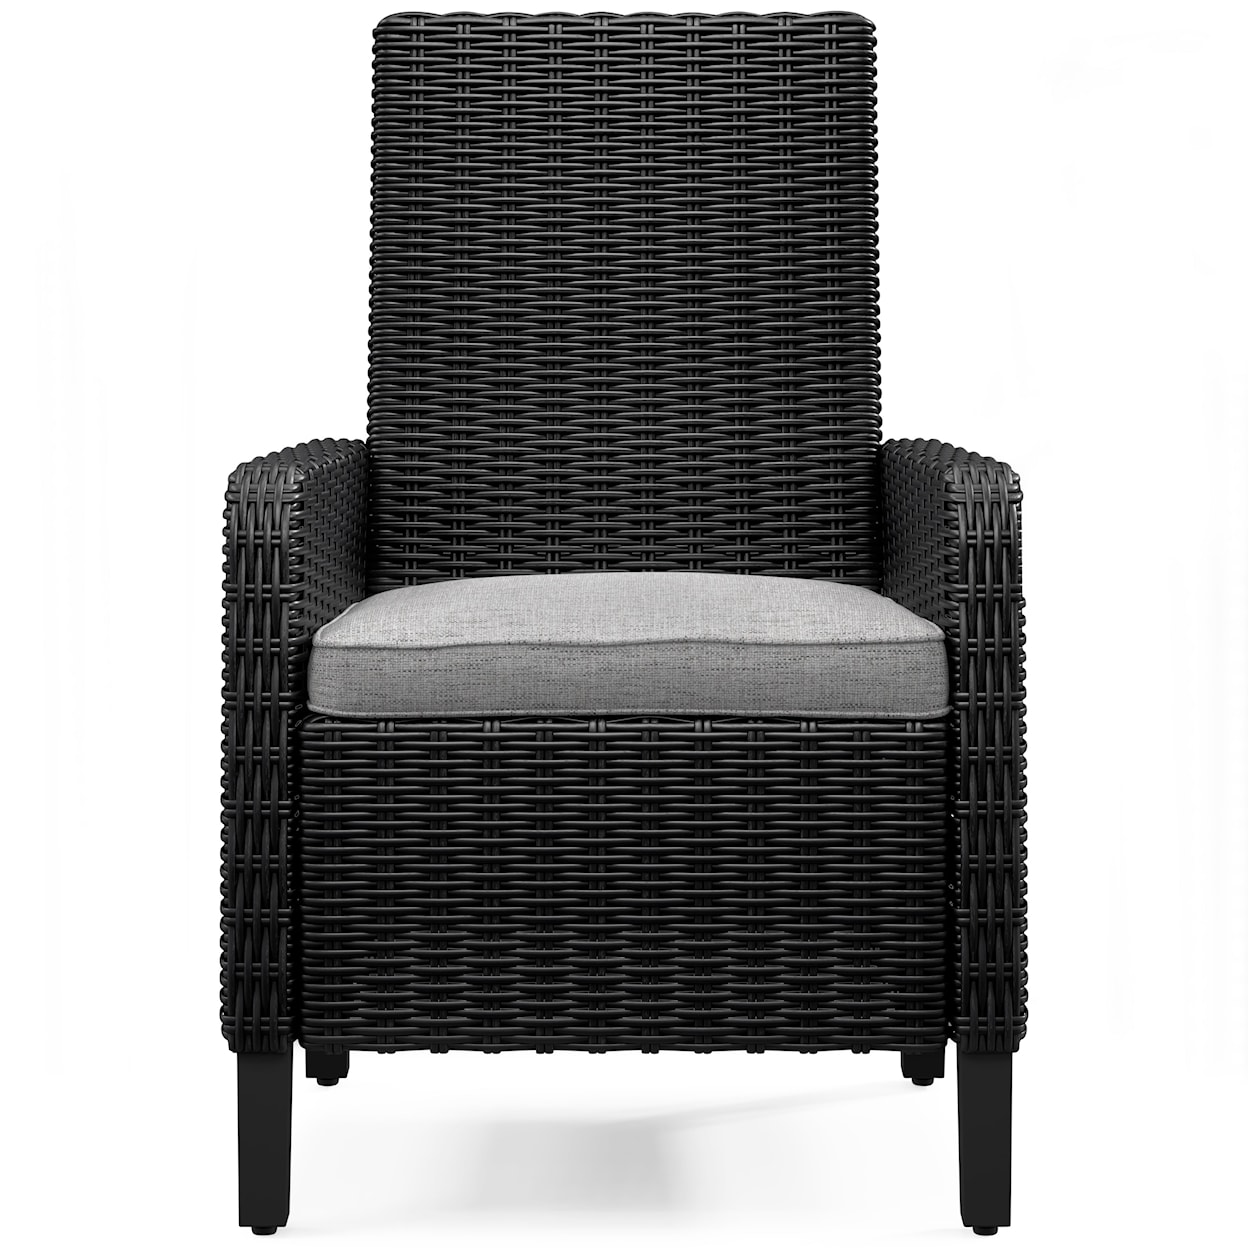 Signature Design by Ashley Beachcroft Arm Chair with Cushion